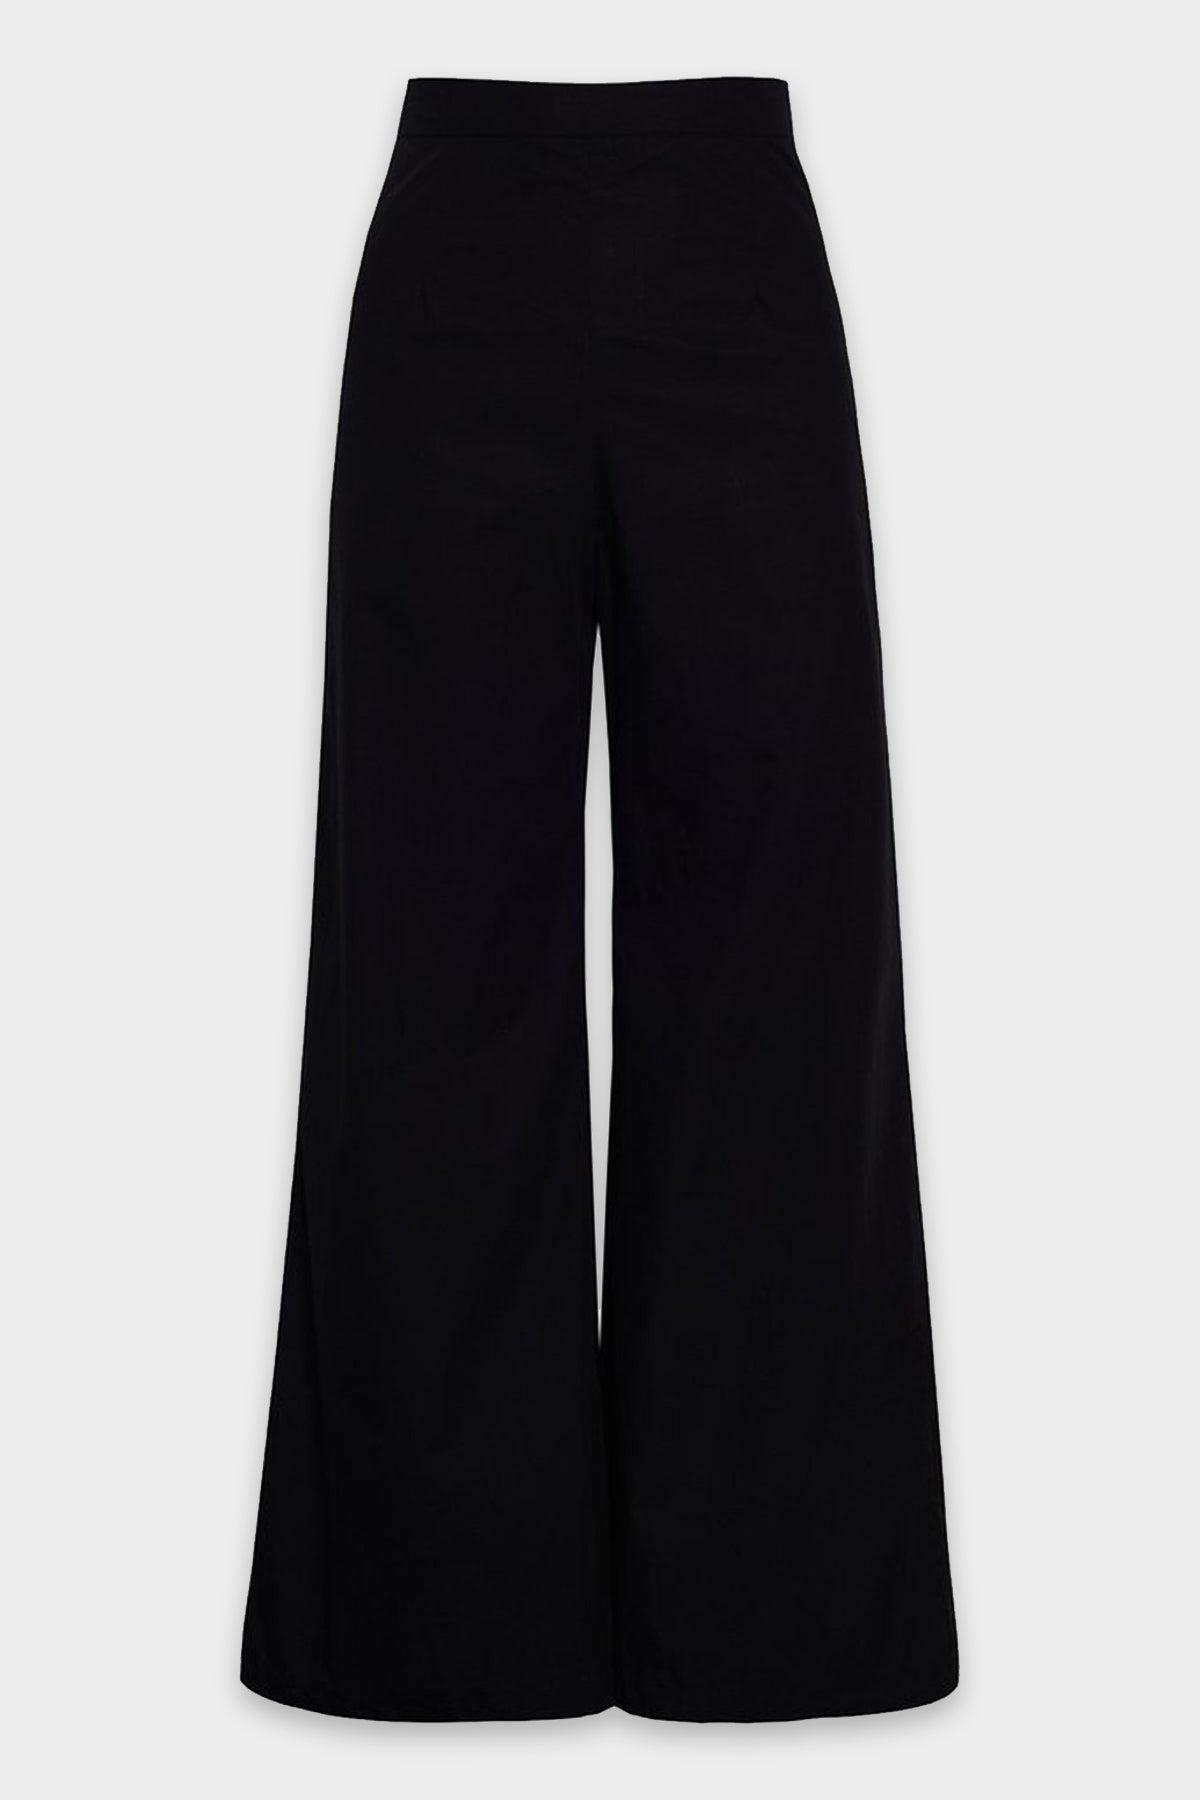 Lario Pants in Plain Black - shop-olivia.com